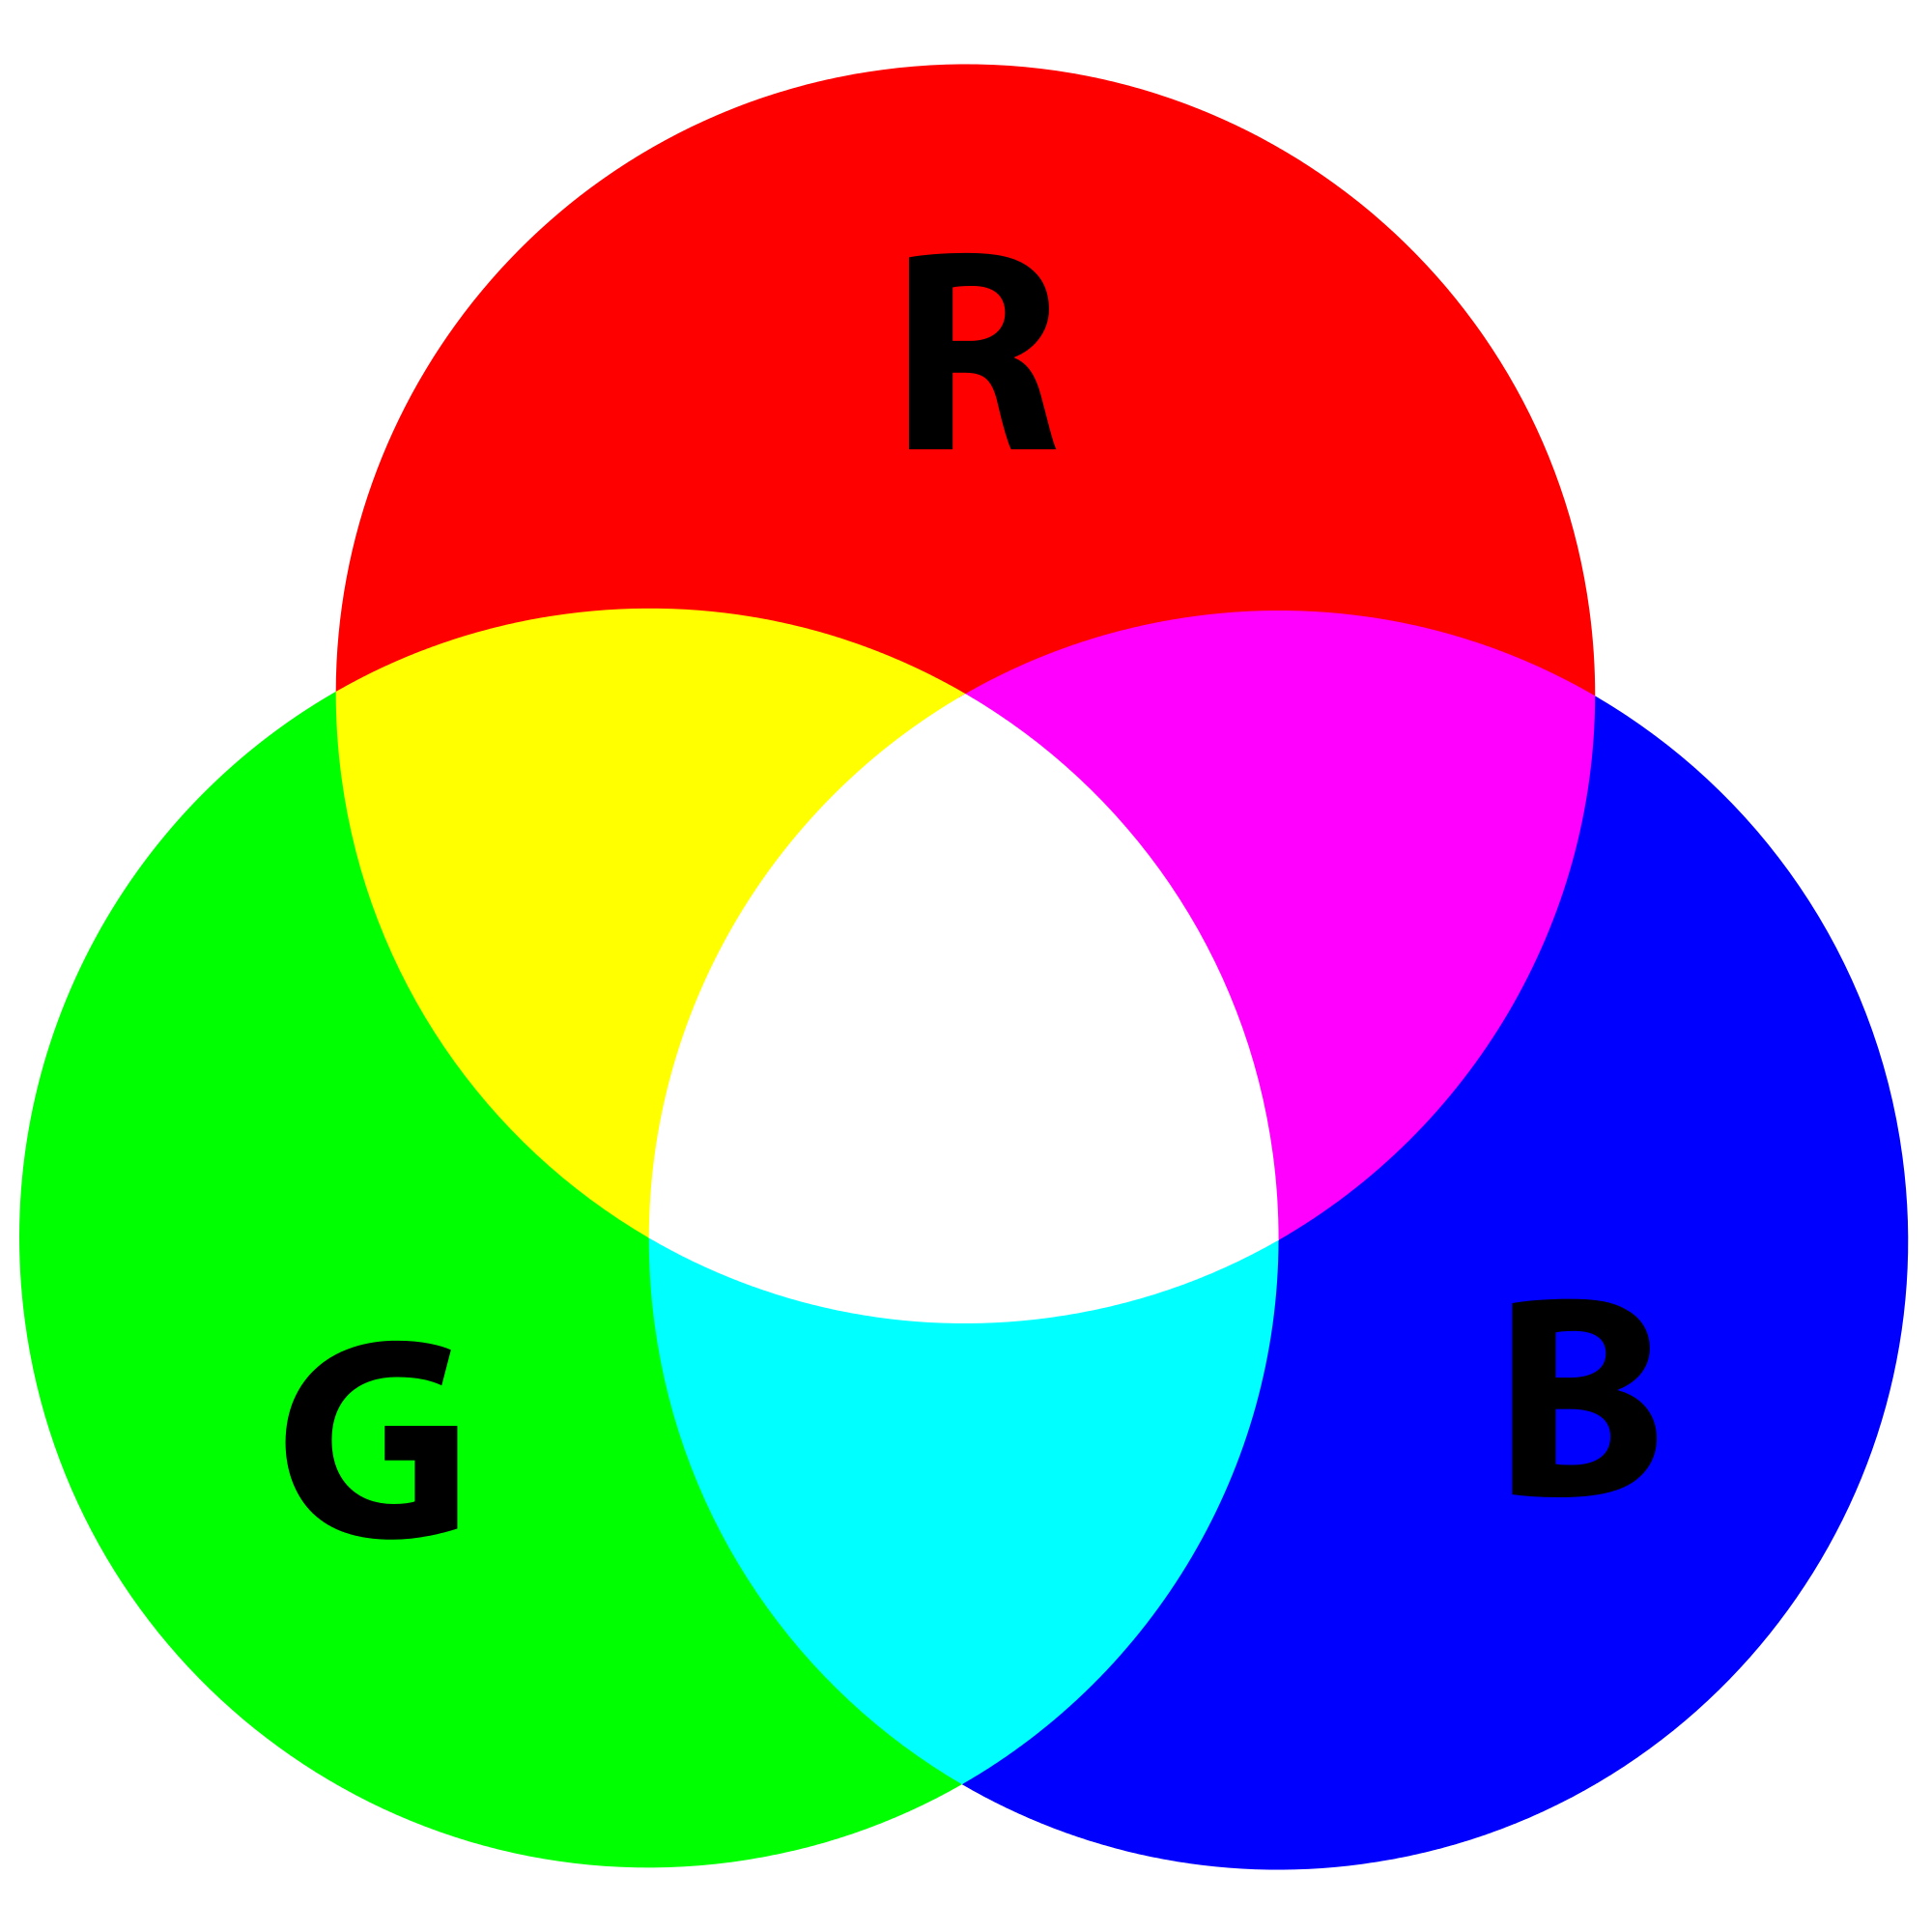 rgb colour